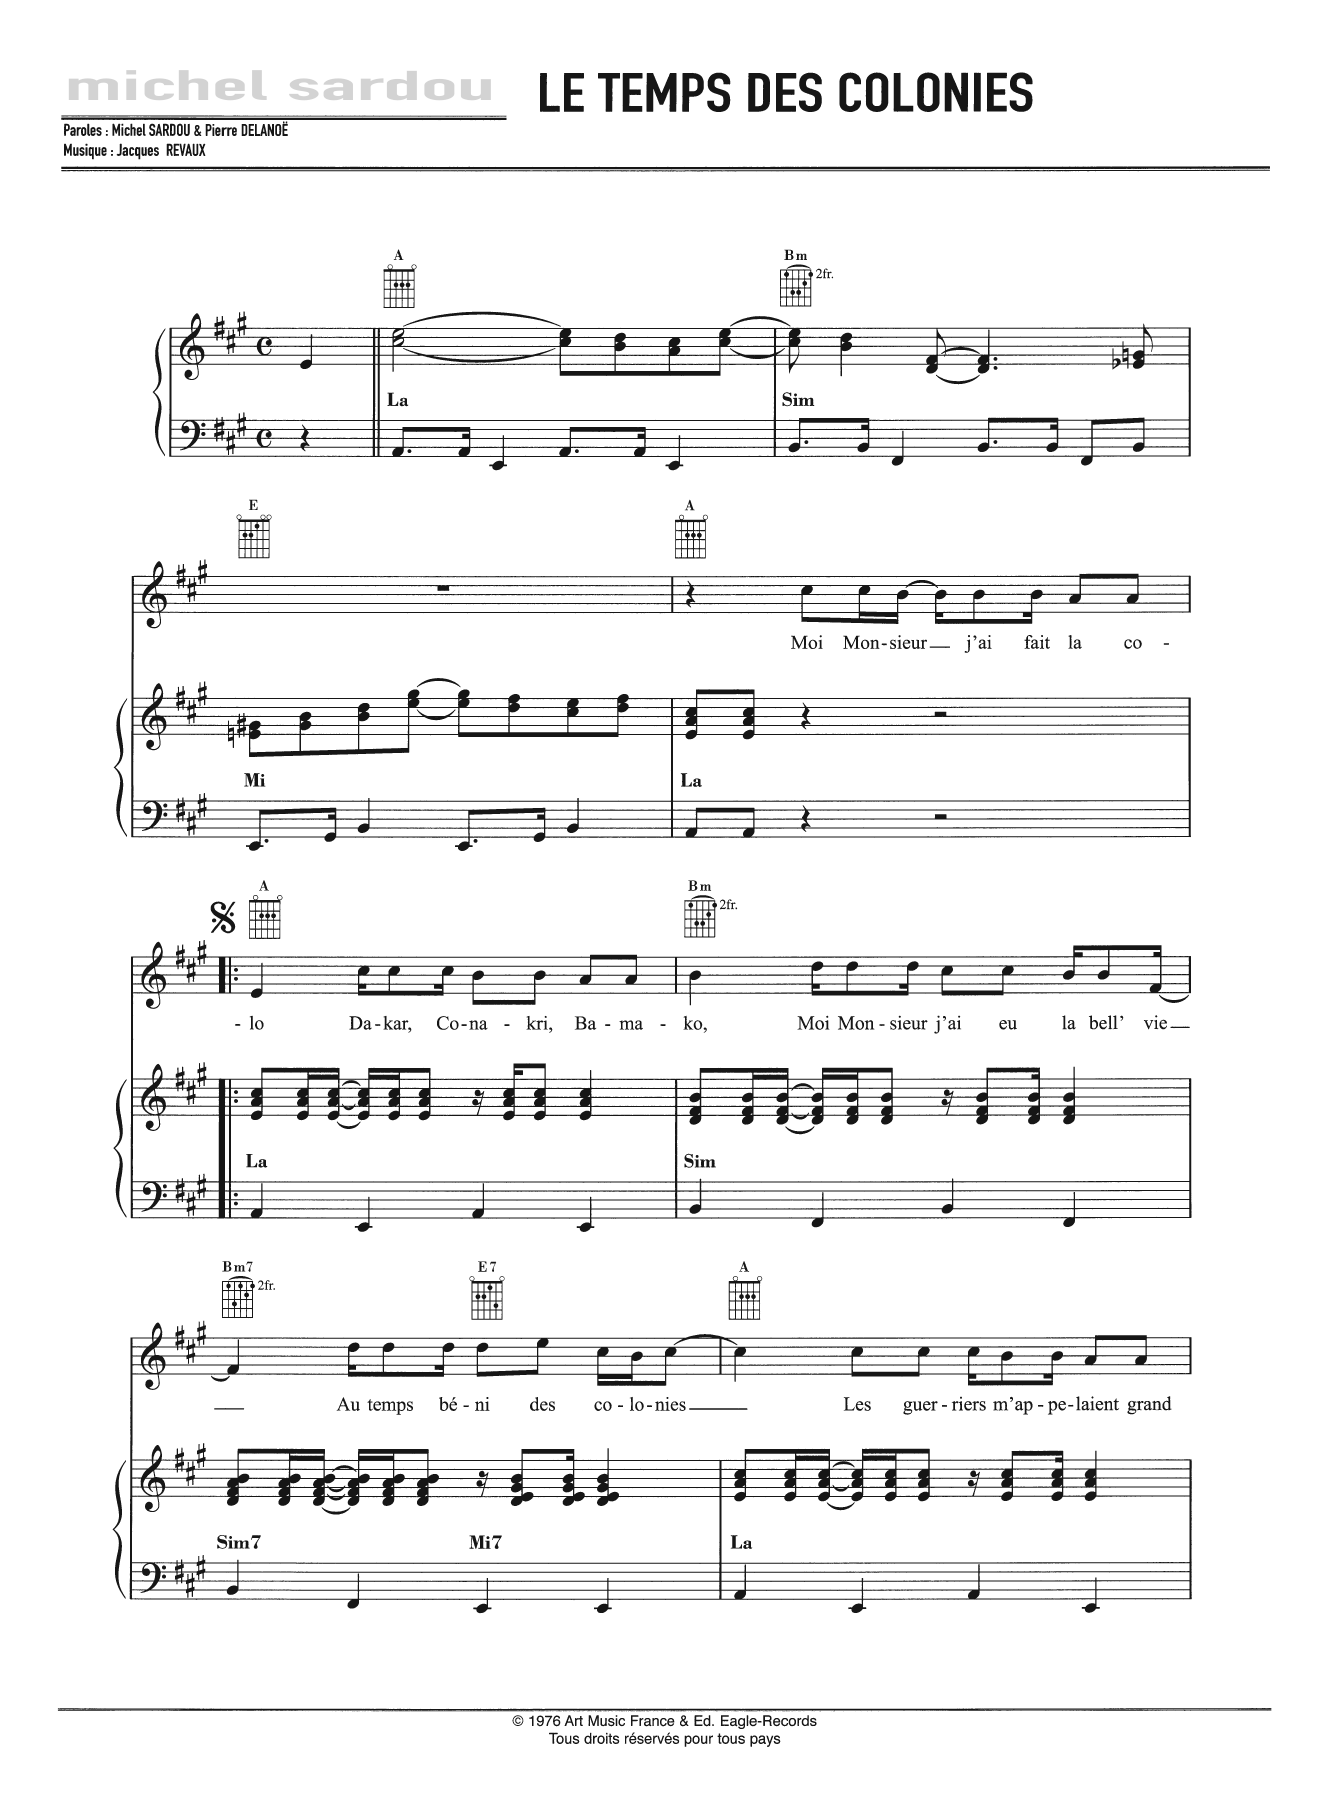 Michel Sardou Le Temps Des Colonies Sheet Music Notes & Chords for Piano, Vocal & Guitar - Download or Print PDF